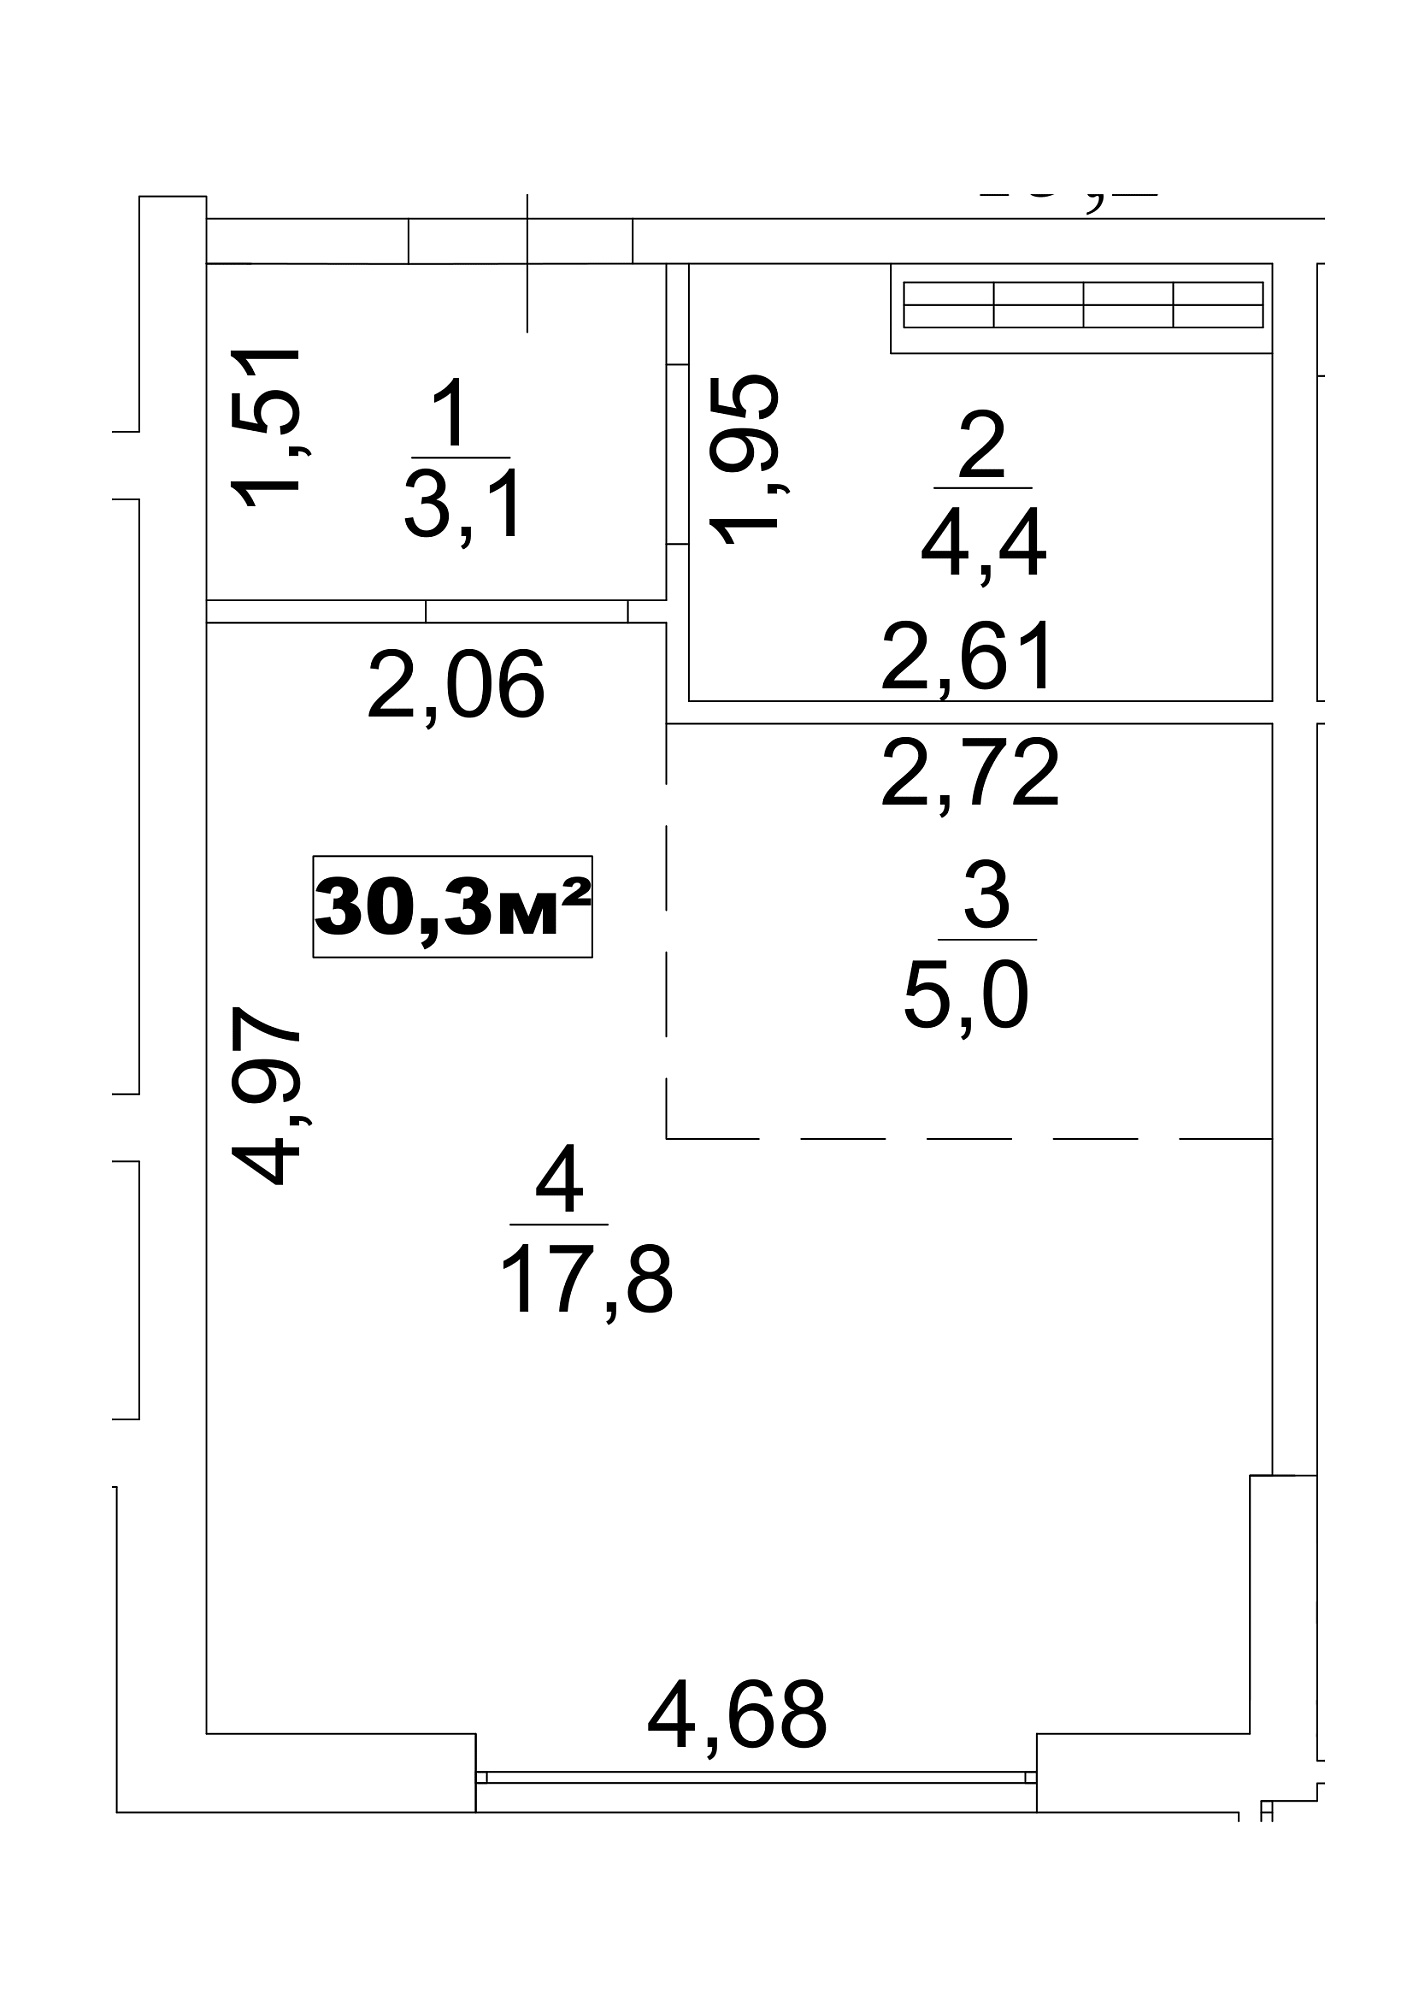 Планировка Smart-квартира площей 30.3м2, AB-13-06/00051.